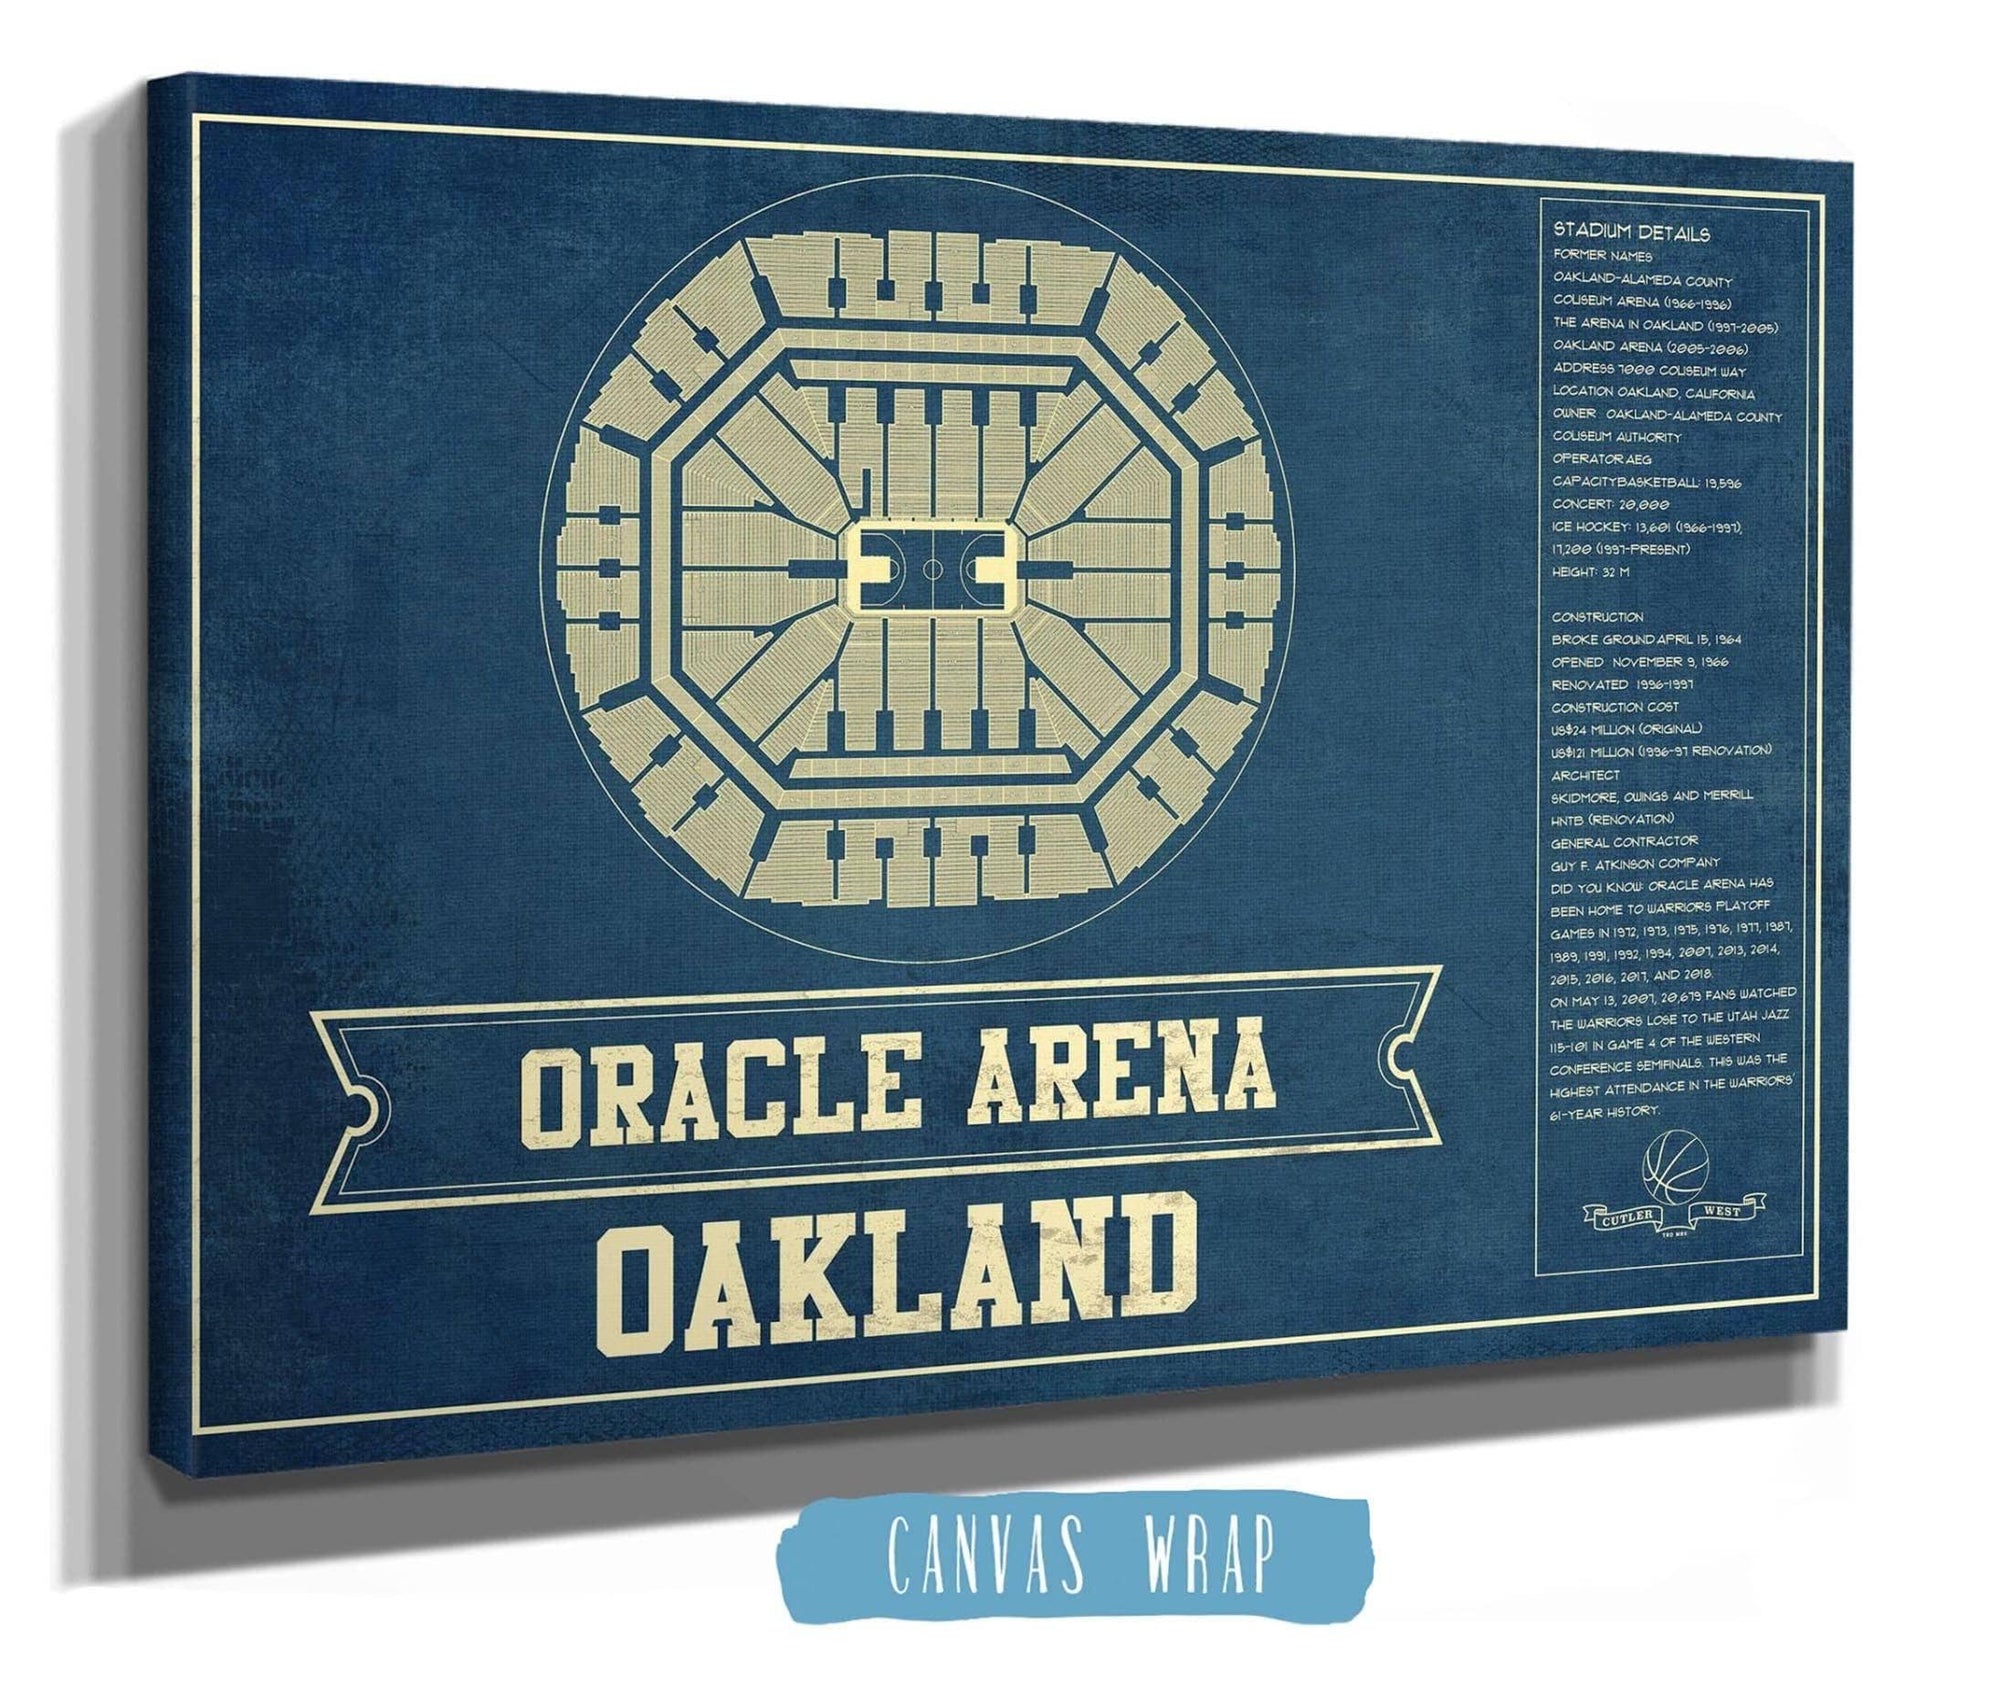 Cutler West Basketball Collection Golden State Warriors - Oracle Arena Vintage Basketball Blueprint Framed NBA Print